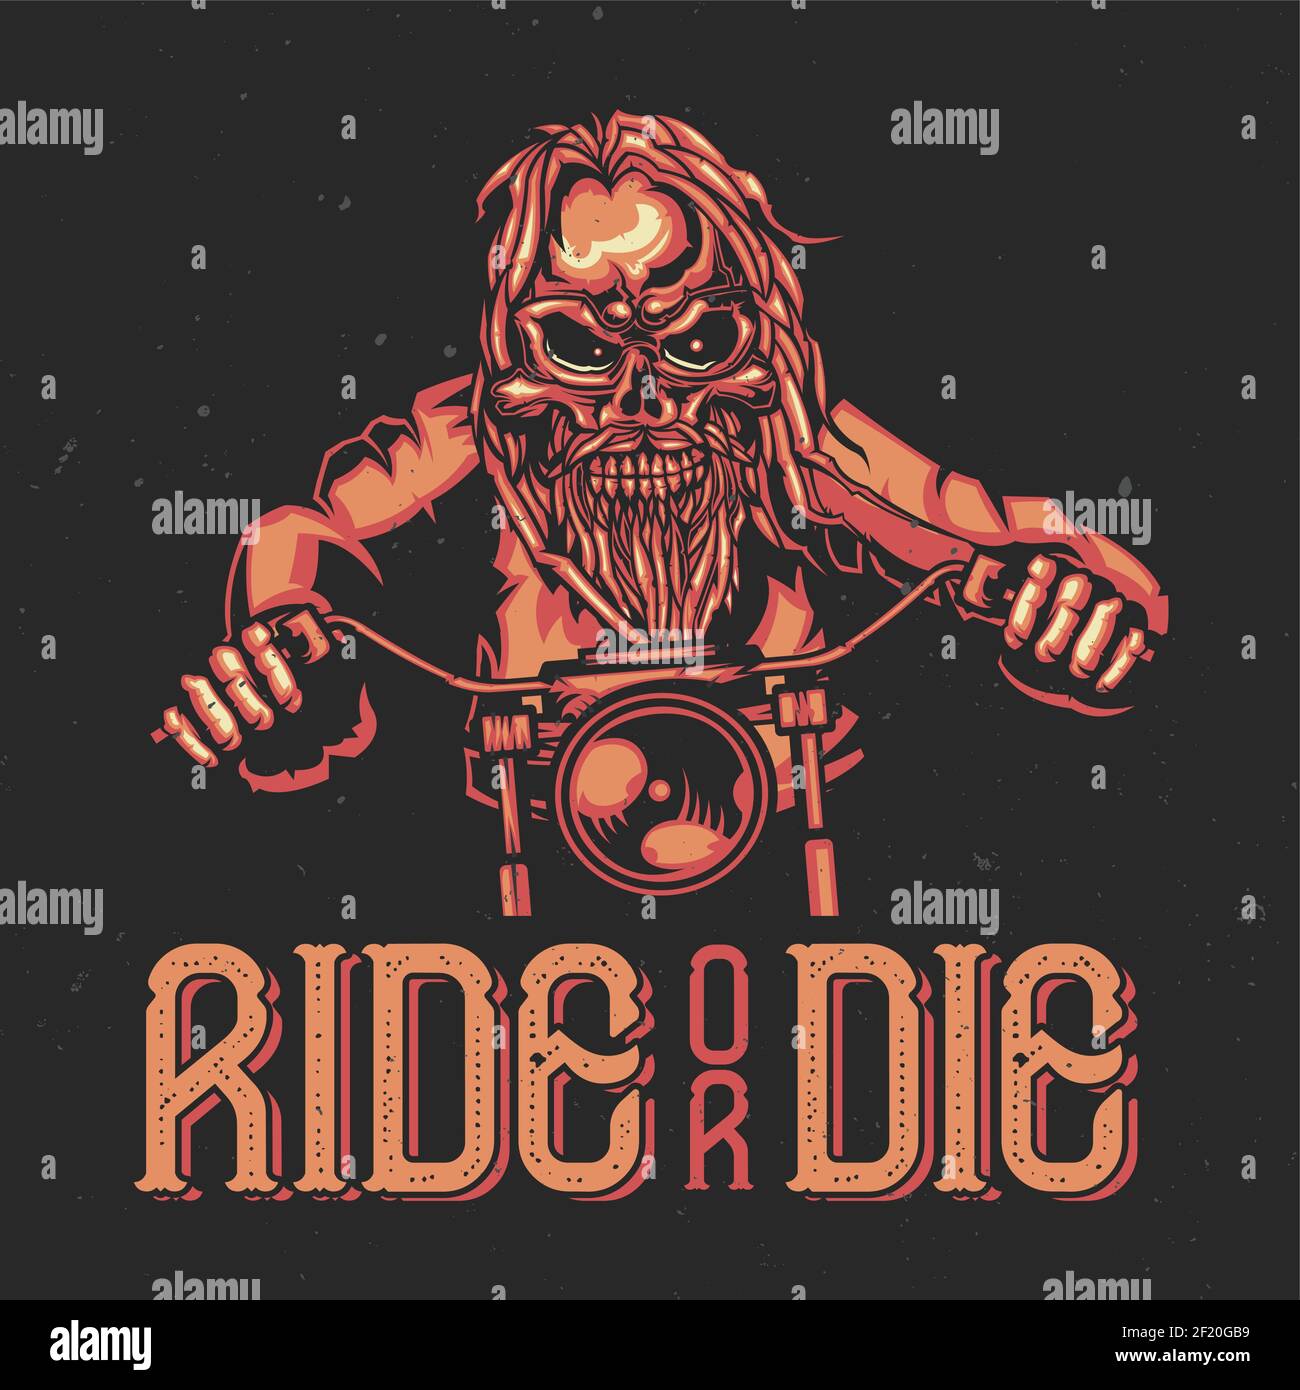 T-shirt or poster design with illustration of a skeleton on bike. Stock Vector